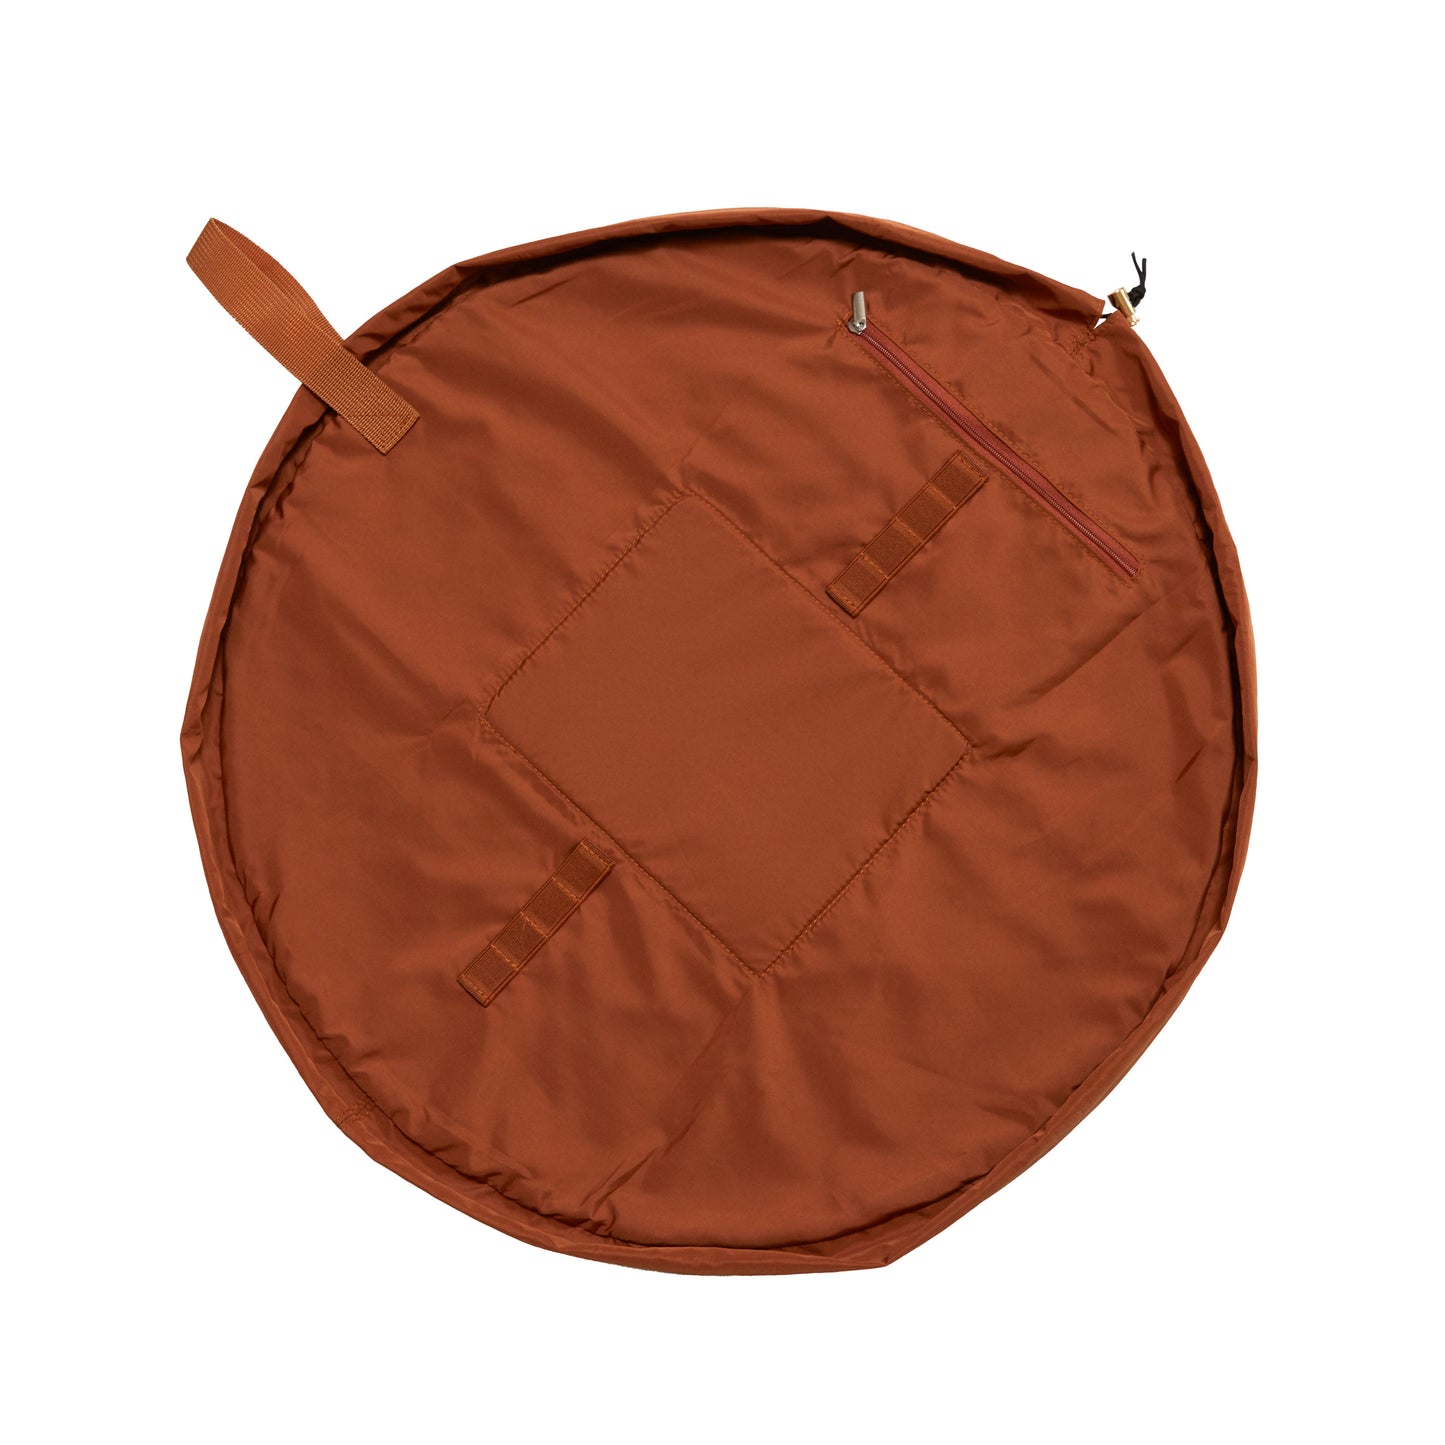 Monochrome Tan Leather Full Size Flat Lay Makeup Bag